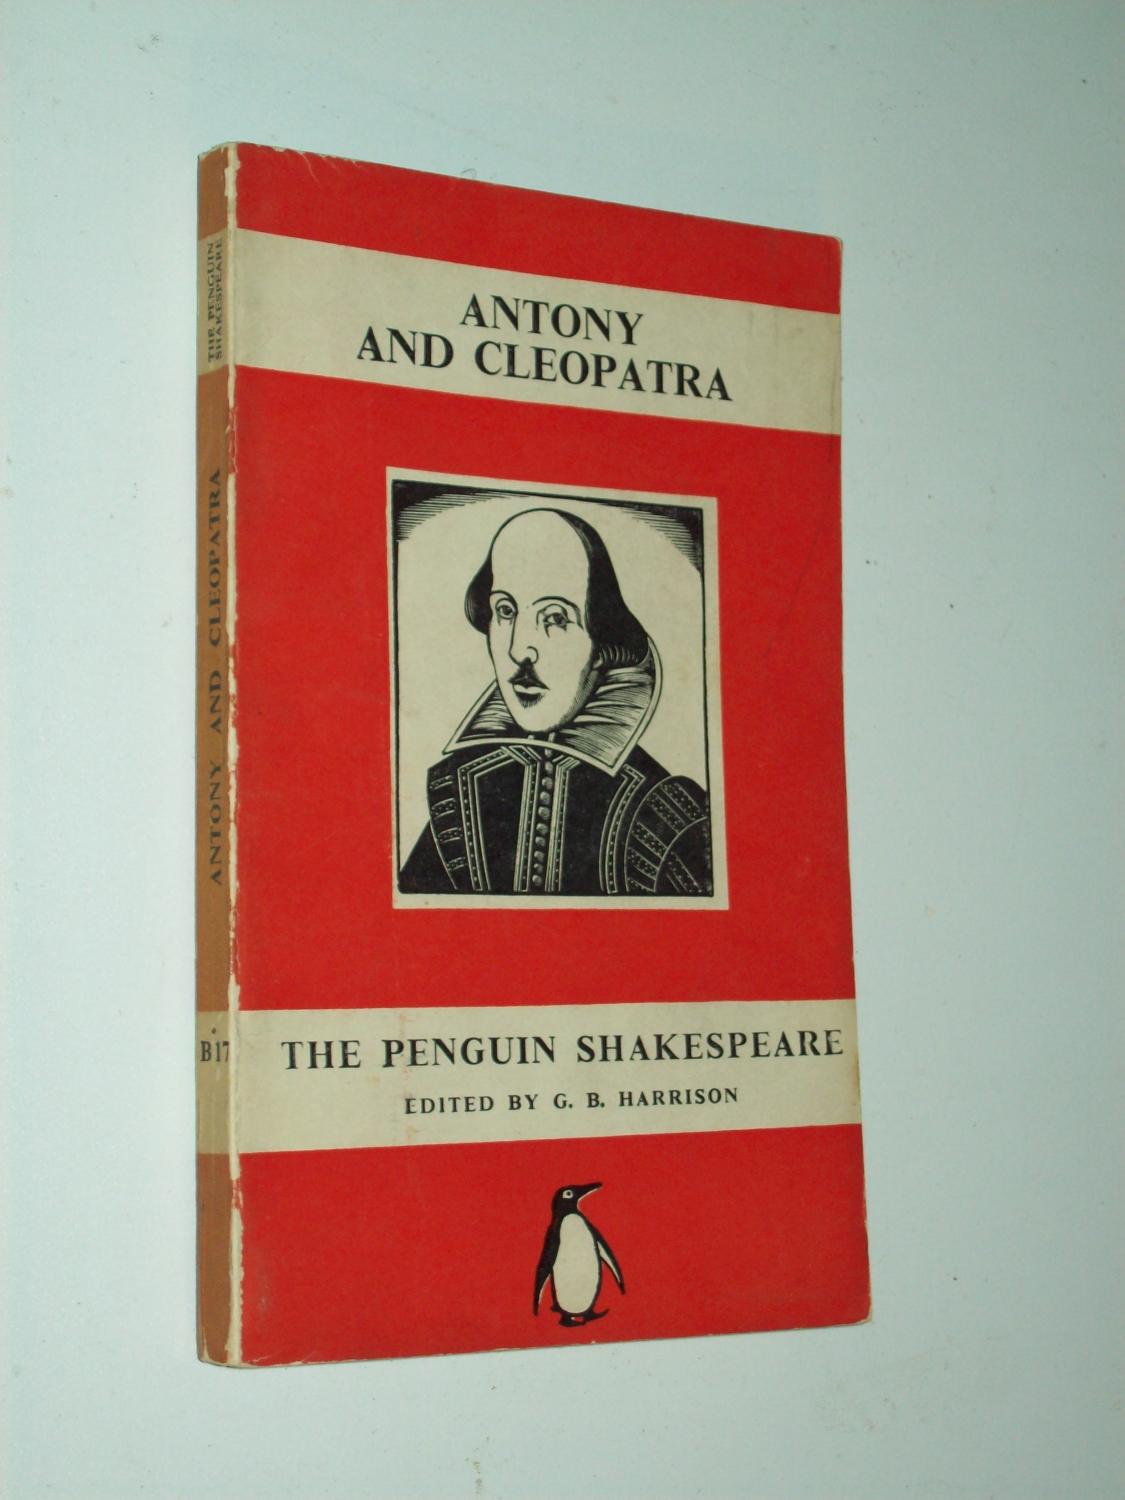 Antony And Cleopatra [The Penguin Shakespeare B17] - William Shakespeare: edited by G. B. Harrison